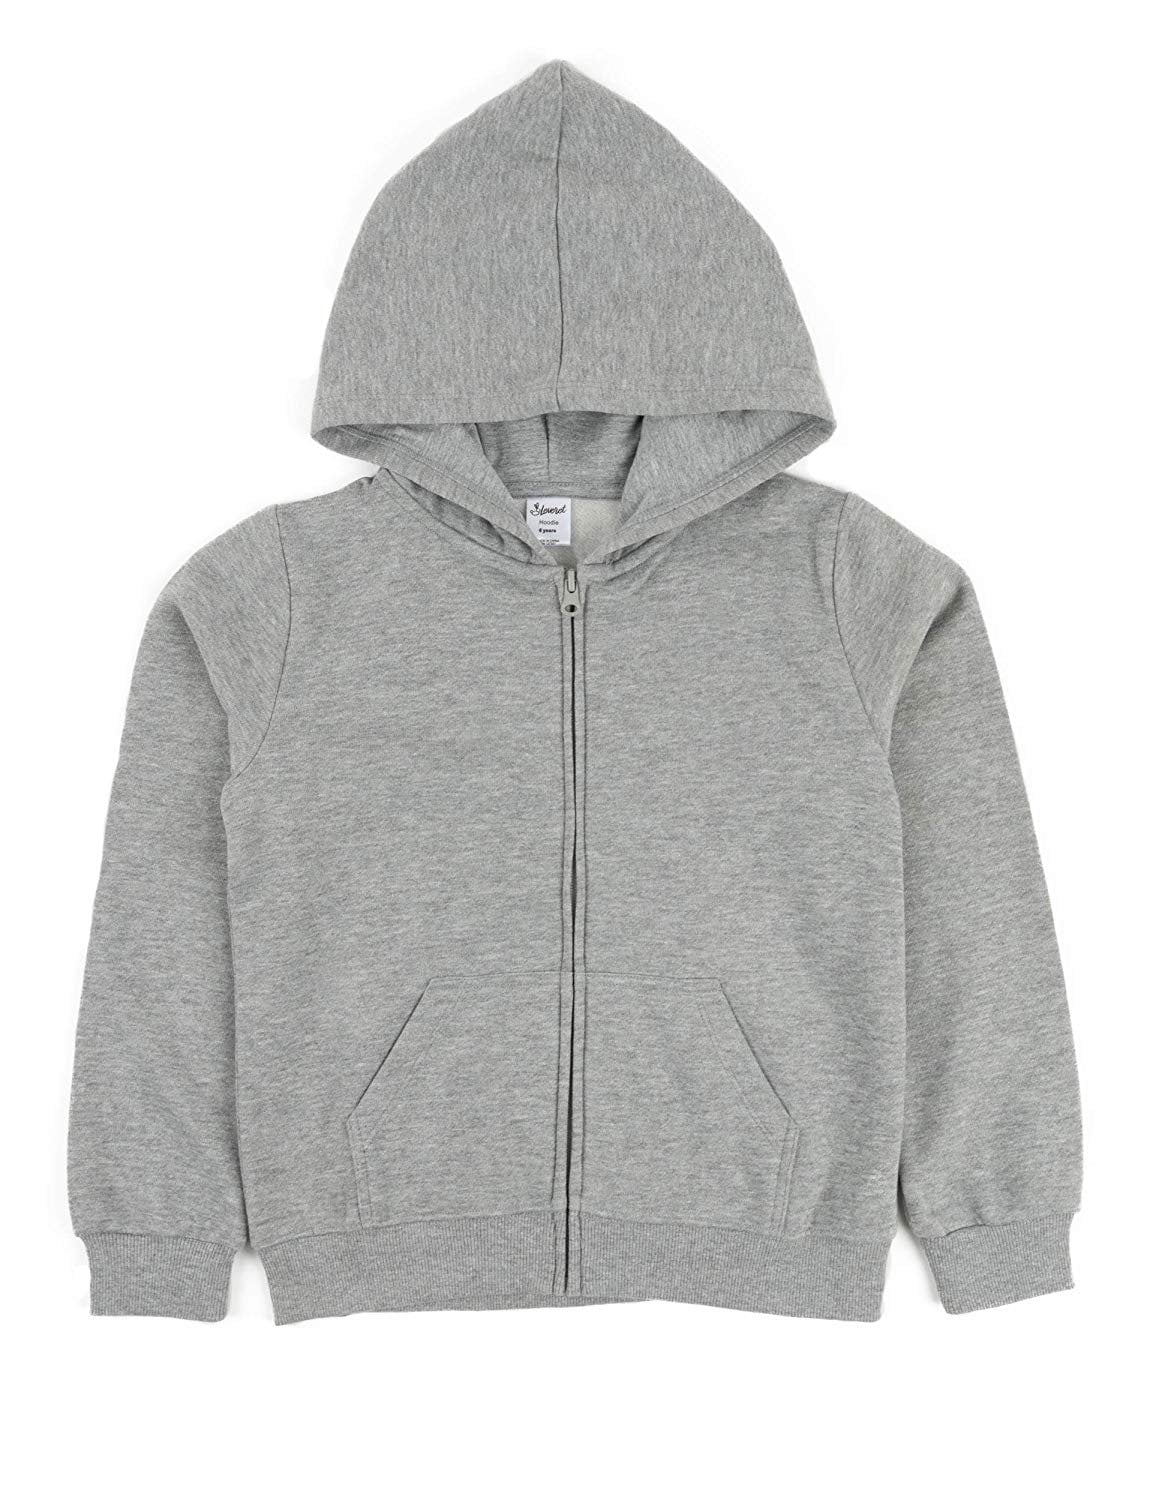 Kinberr Boys Girls Hooded Sweatshirt Unisex Kids Full Zip Hoodies Jacket Coat Tracksuit with Pockets 5-14 Years 